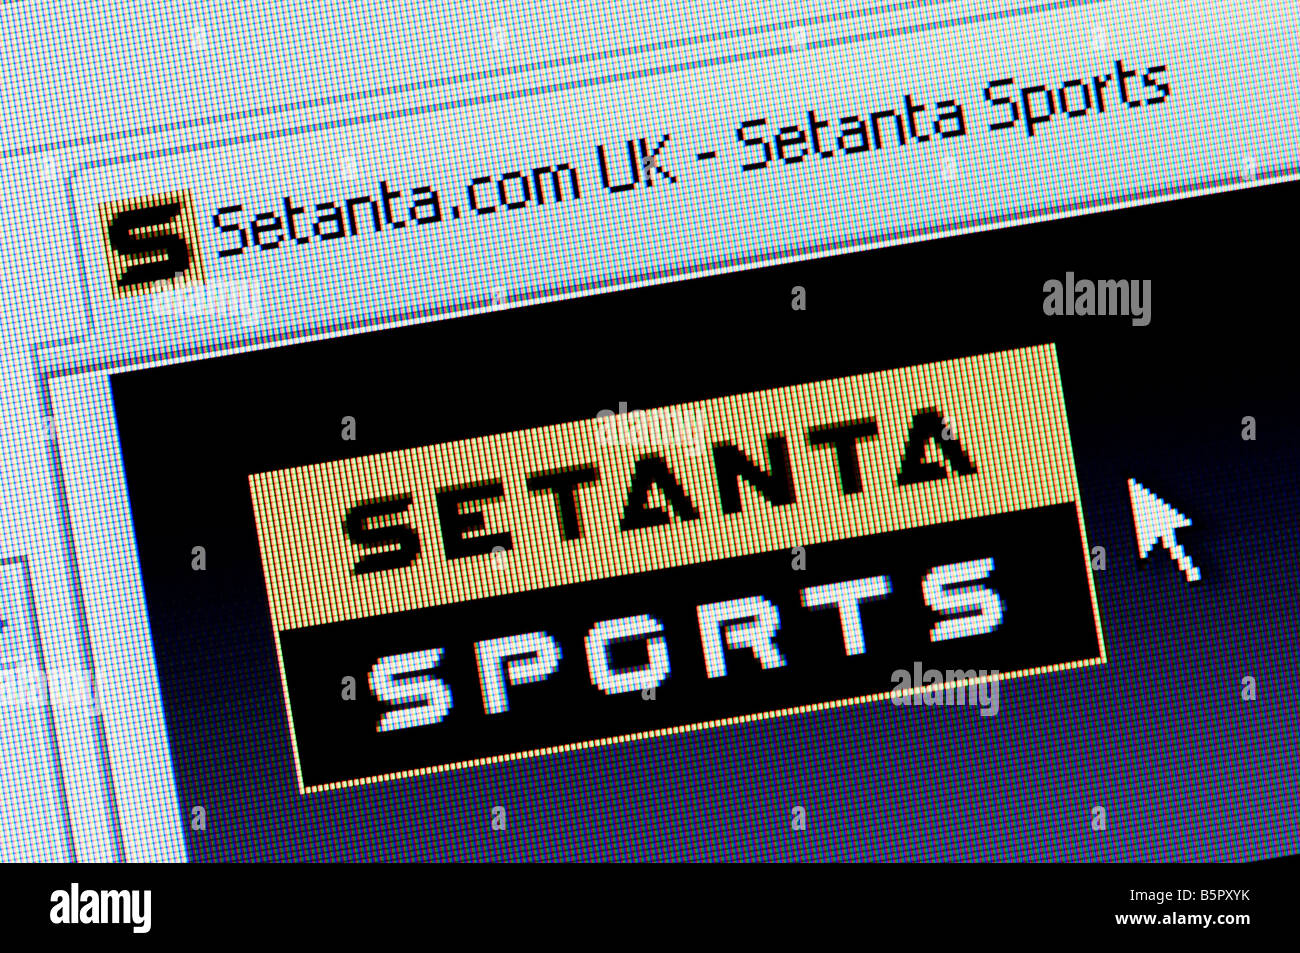 Setanta sports hi-res stock photography and images